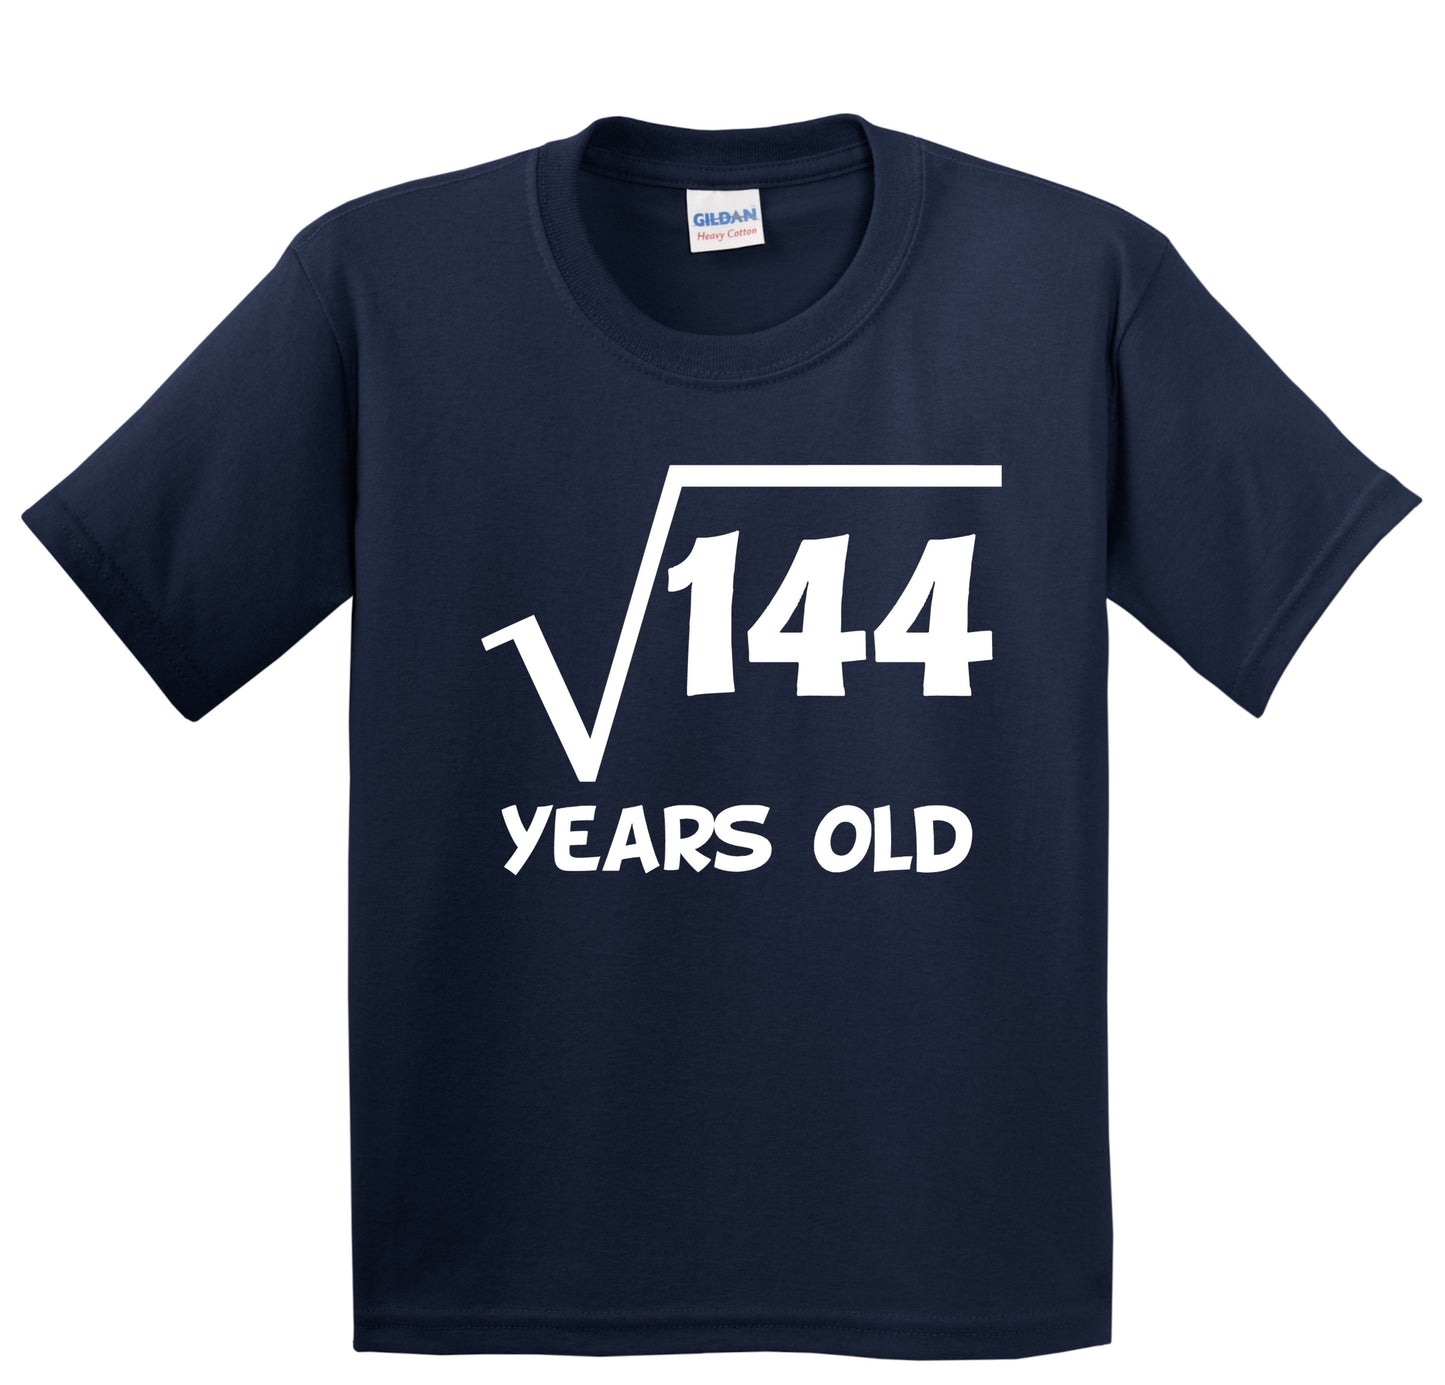 Kids 12th Birthday Shirt Square Root 12 Years Old Math T-Shirt